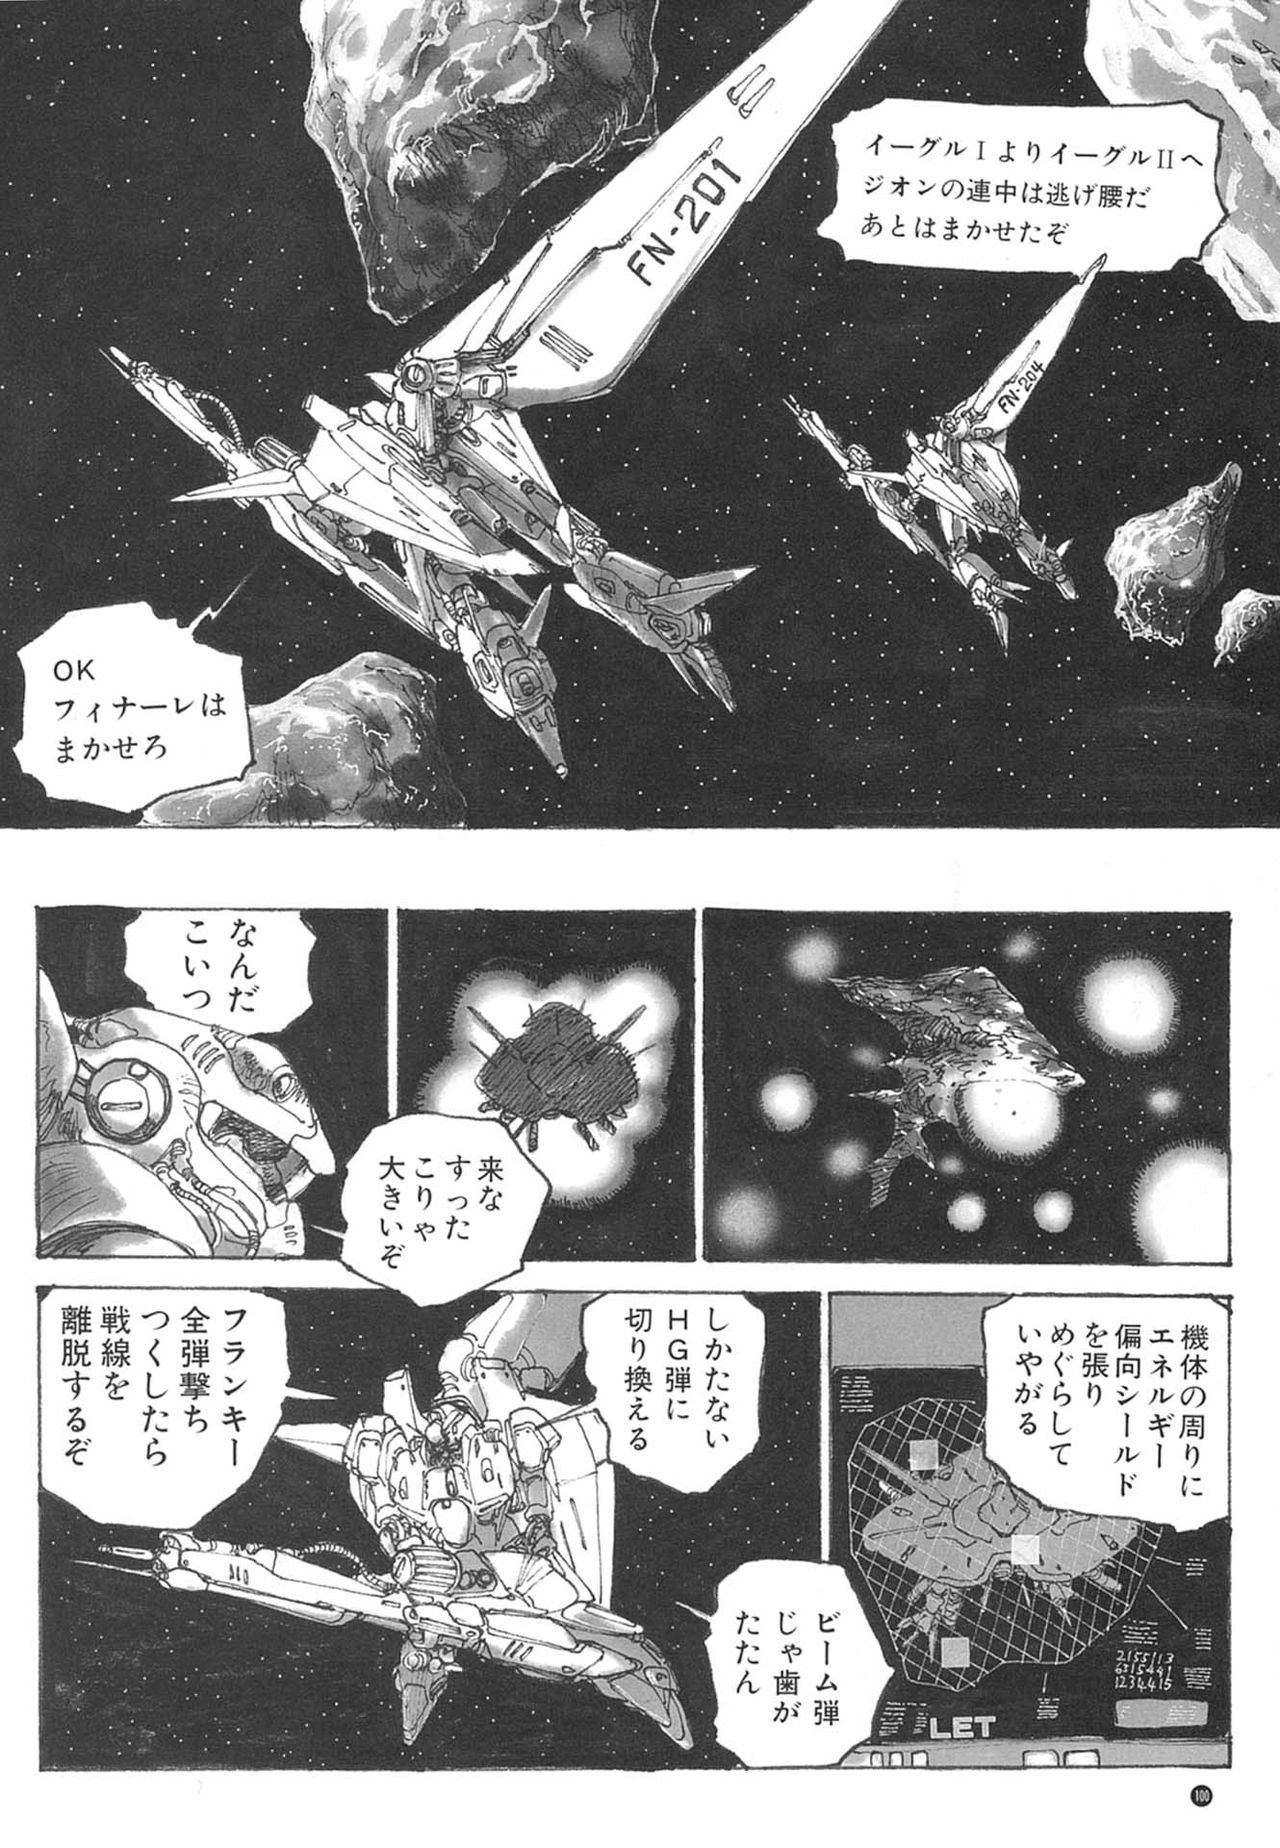 [Kazuhisa Kondo] Kazuhisa Kondo 2D & 3D Works - Go Ahead - From Mobile Suit Gundam to Original Mechanism 99